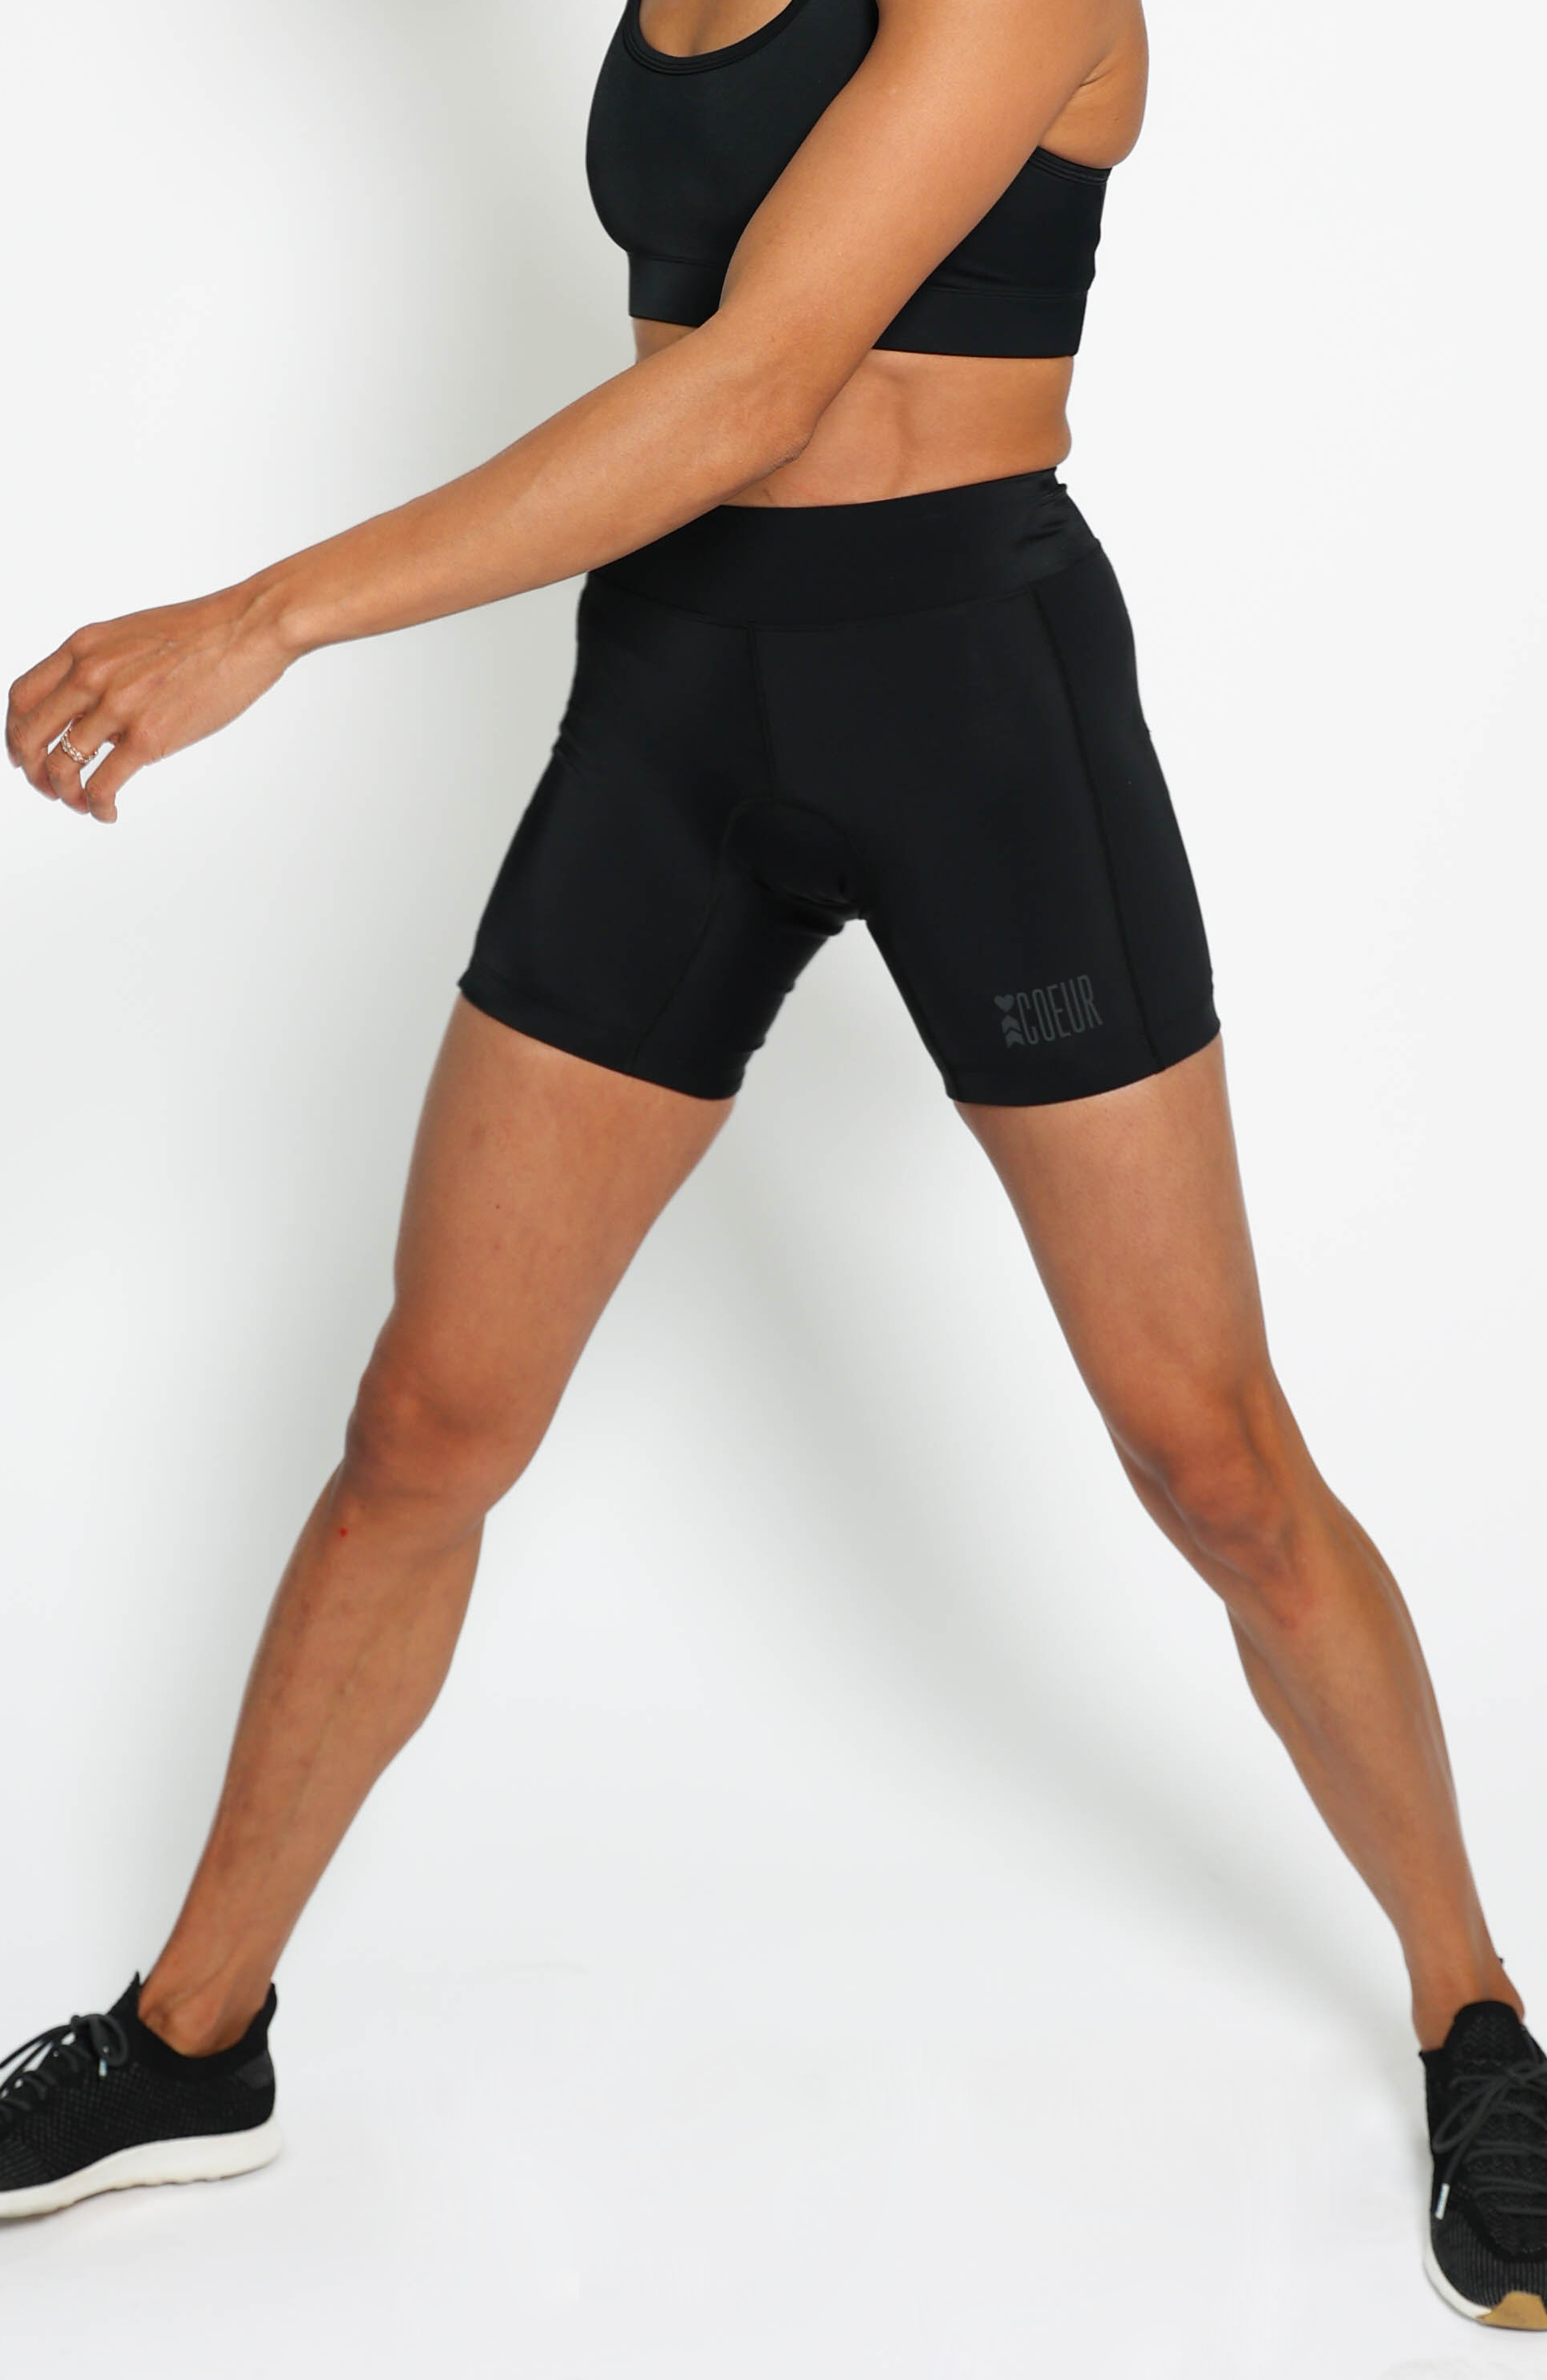 New Sexy Yoga Pants Shorts Women Gym Sports Skims Small Dot